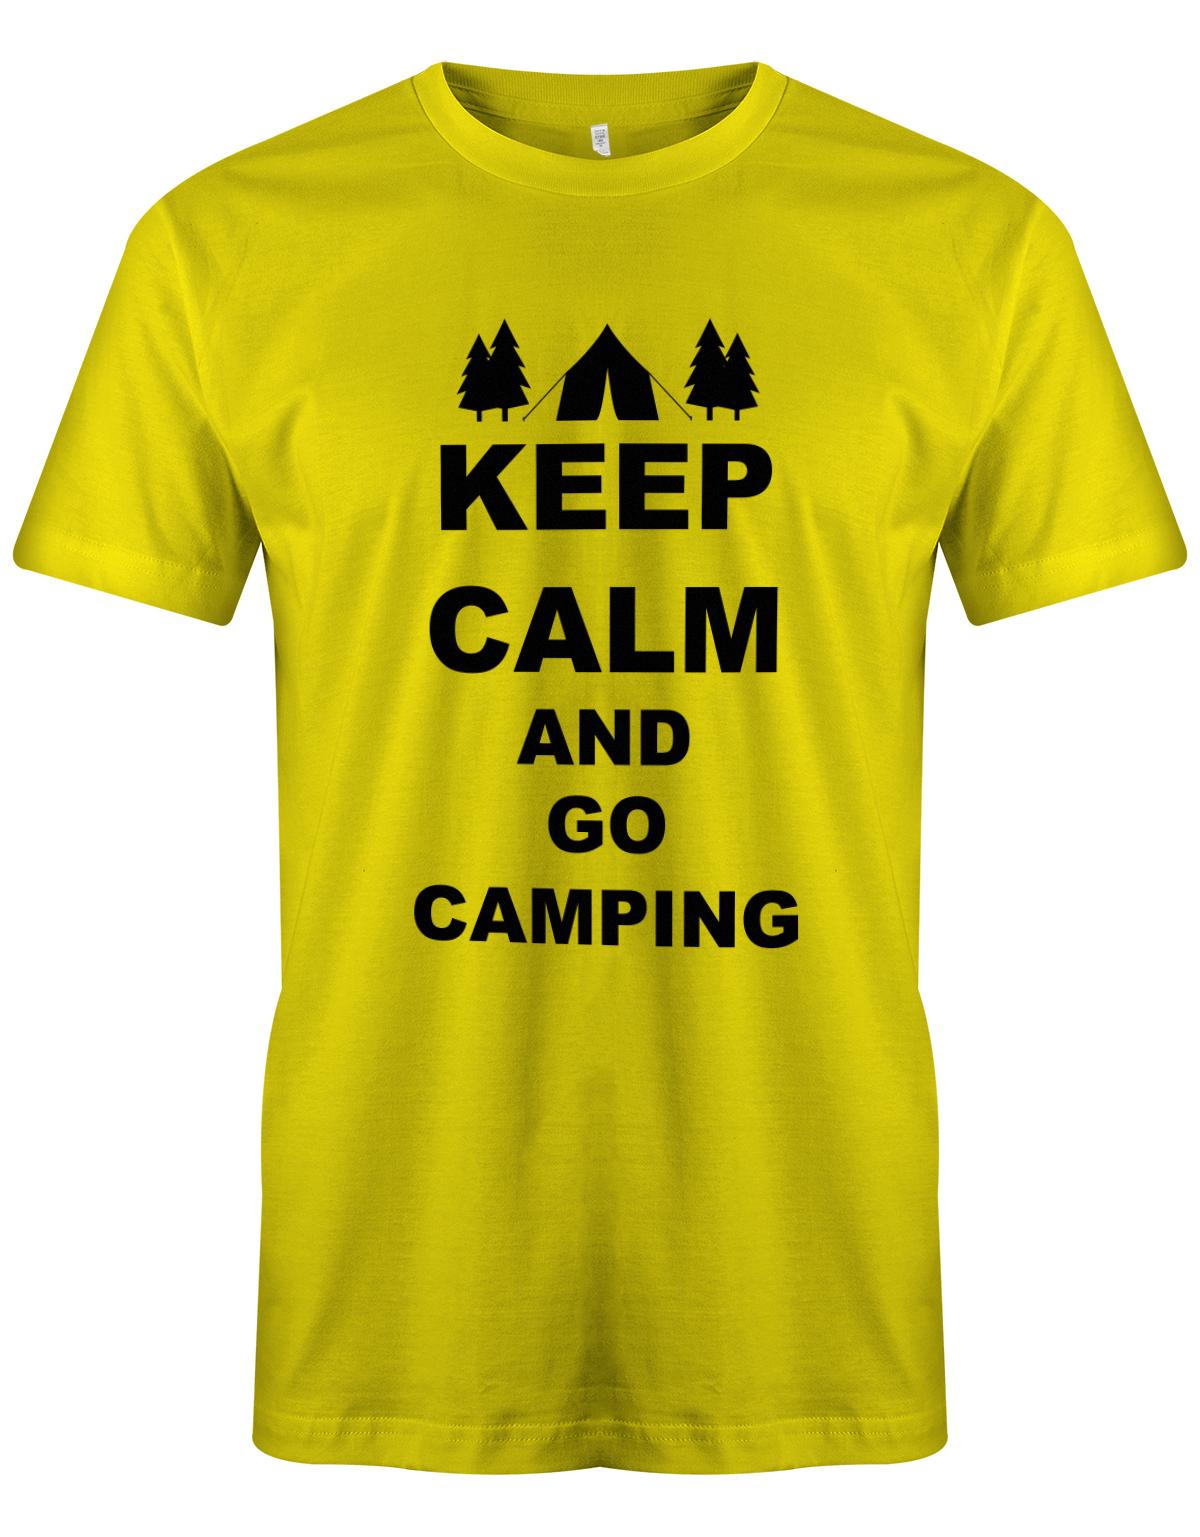 Keep-Calm-and-Go-Camping-Herren-Shirt-Gelb